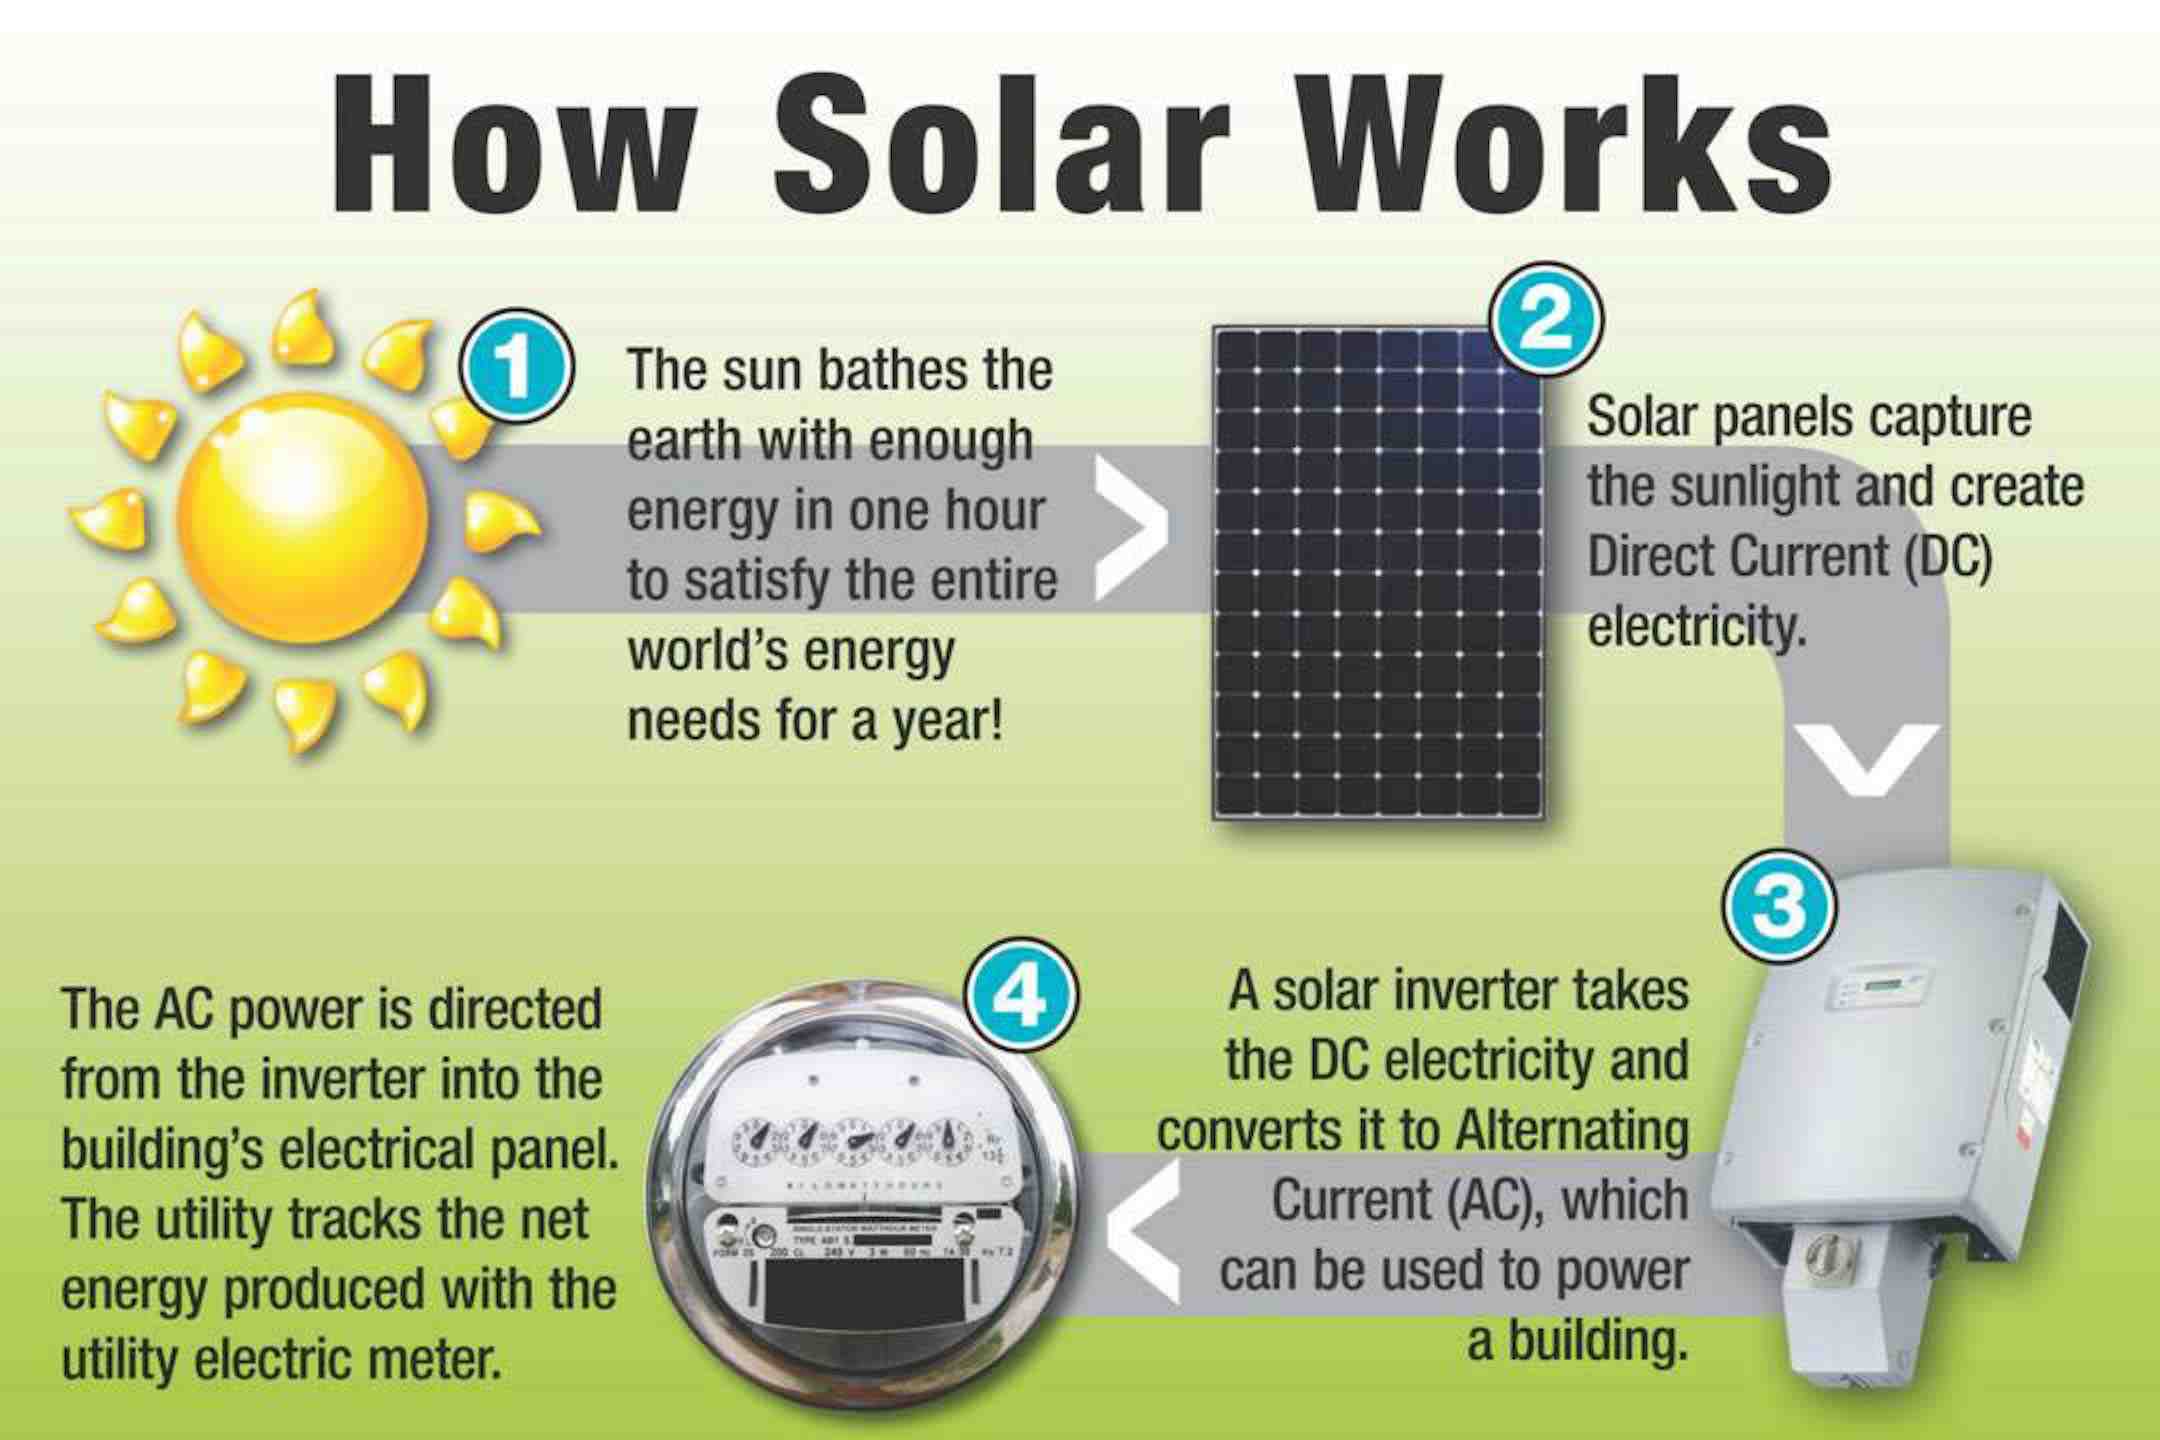 Is solar better for environment?